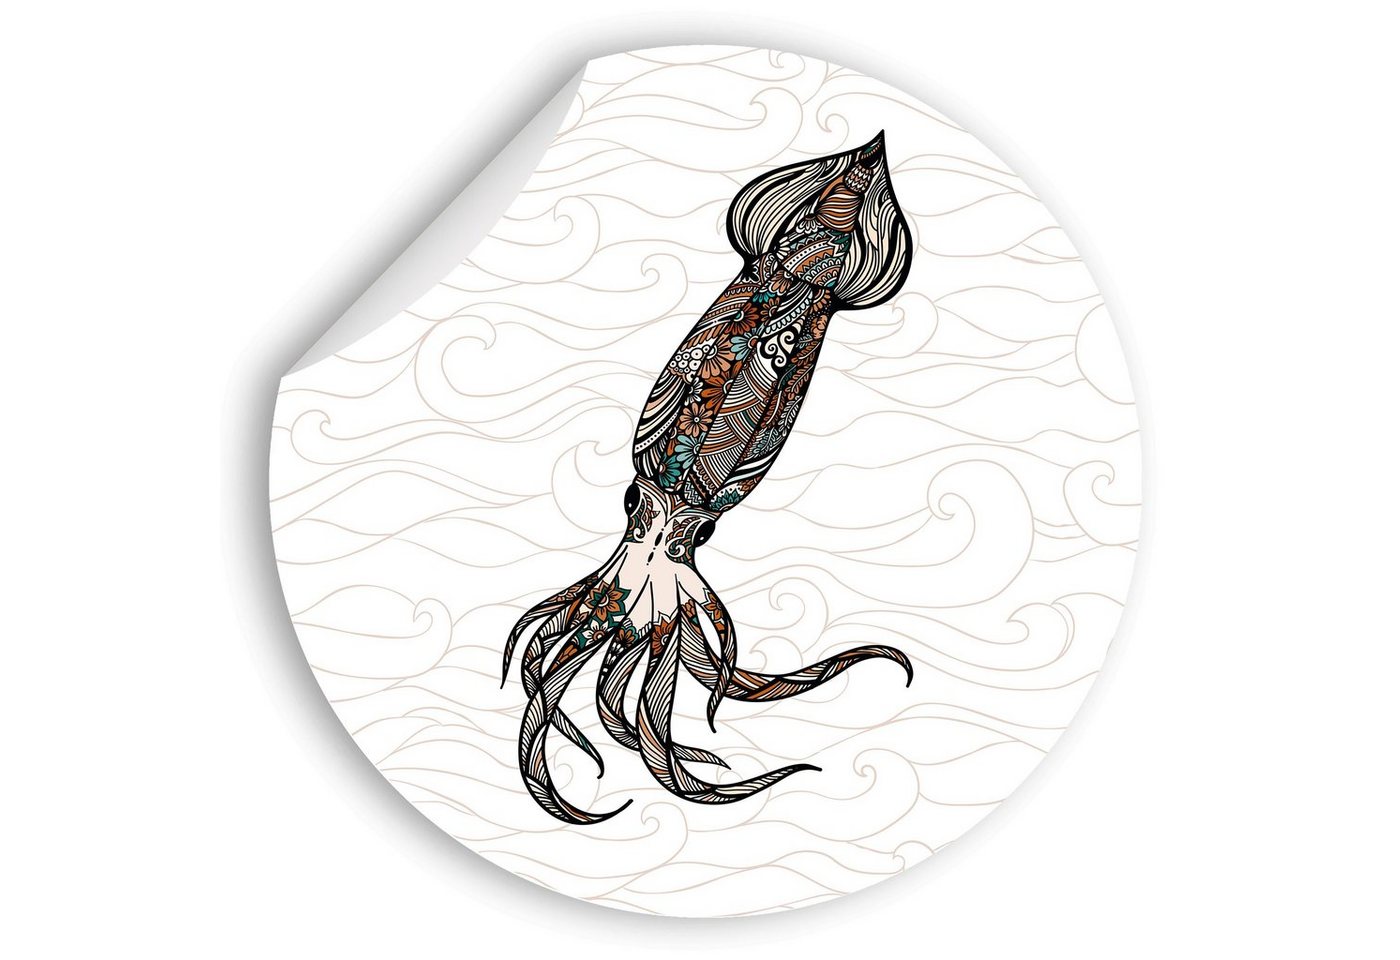 WallSpirit Wandsticker Wandaufkleber rund Tintenfisch Mandala", Selbstklebend, rückstandslos abziehbar" von WallSpirit